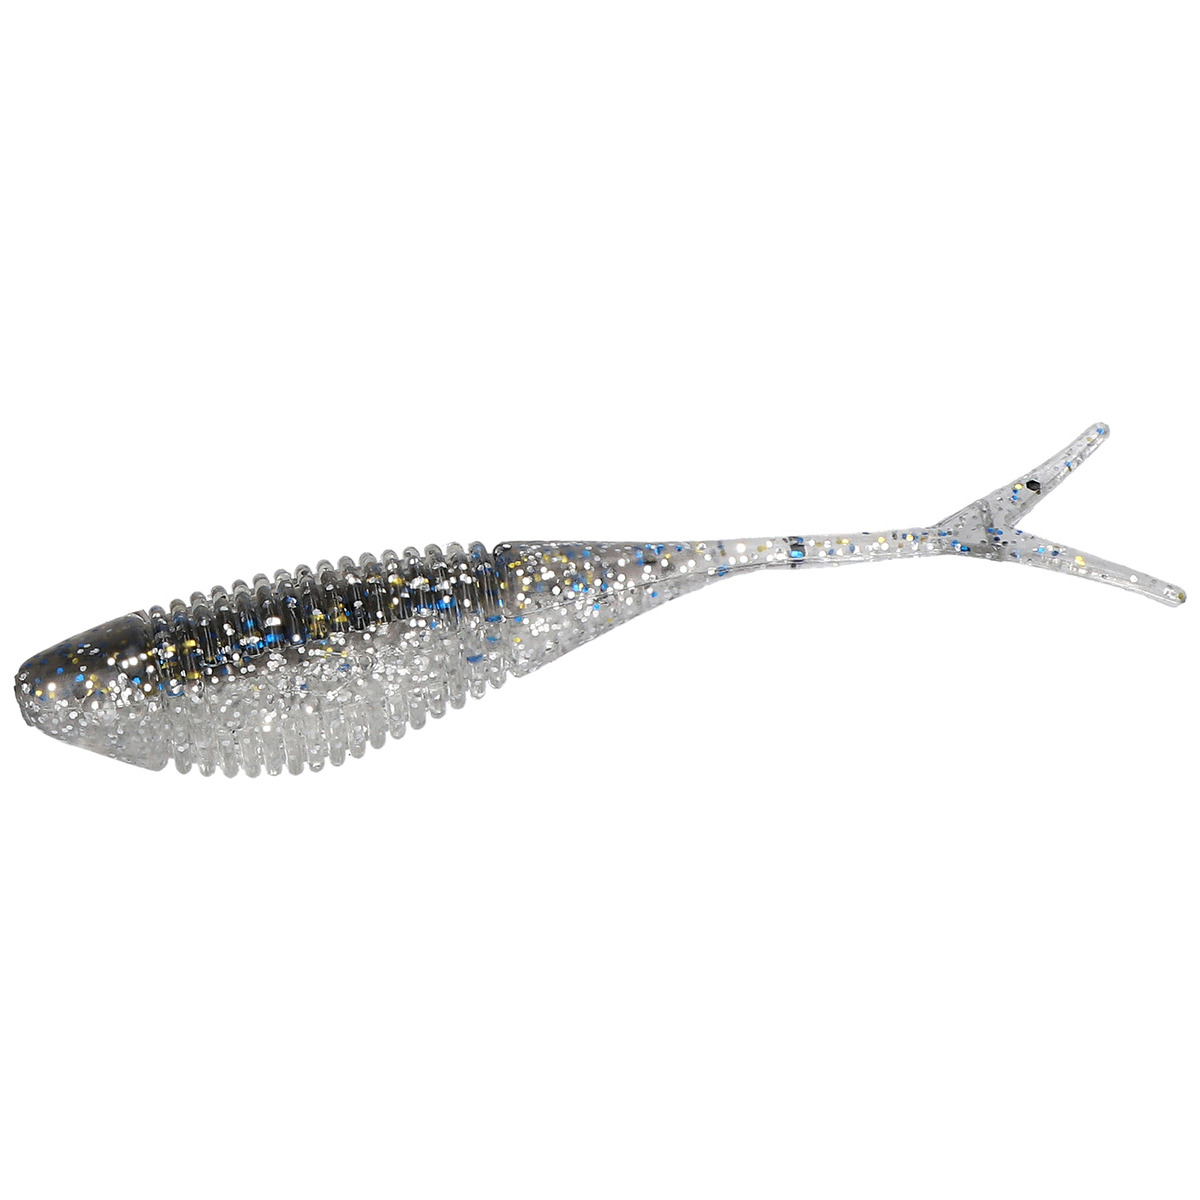 Mikado Fish Fry - 8 cm / 564